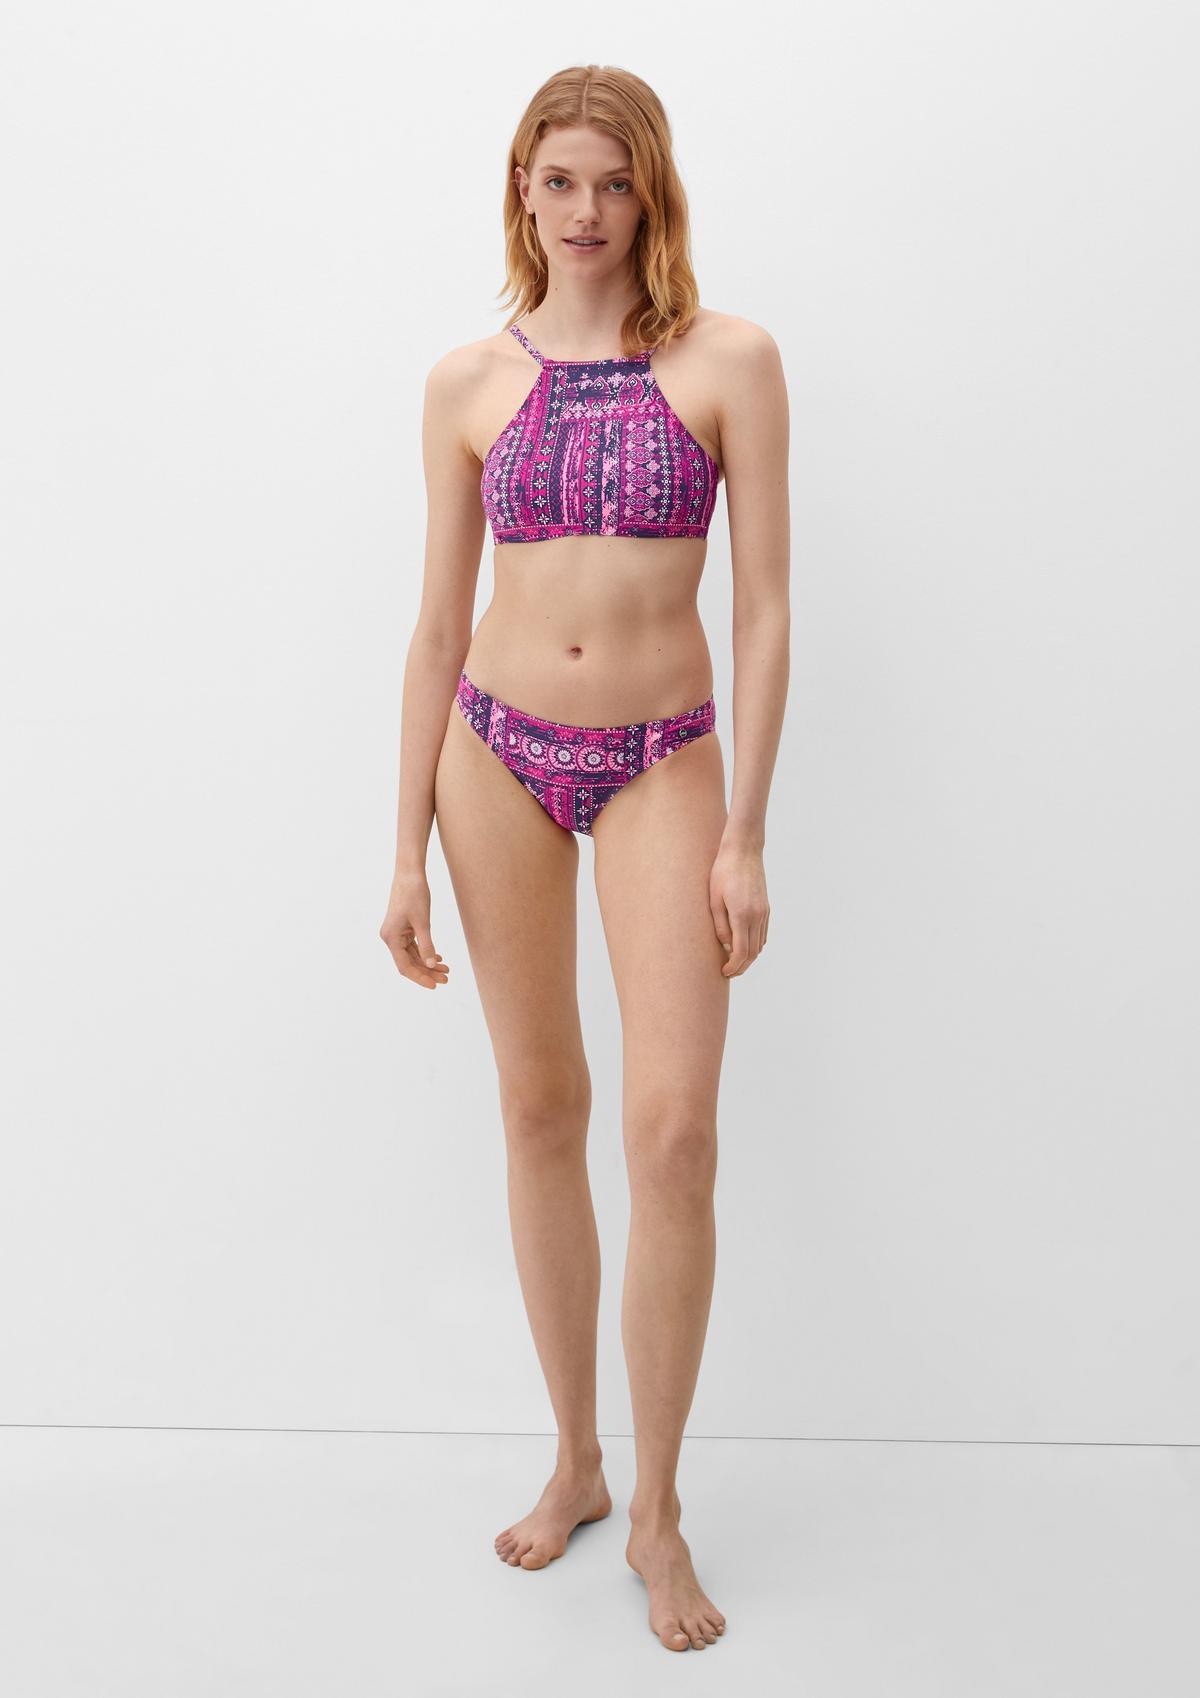 Bustier-Bikini im Set mit All-over-Muster - pink